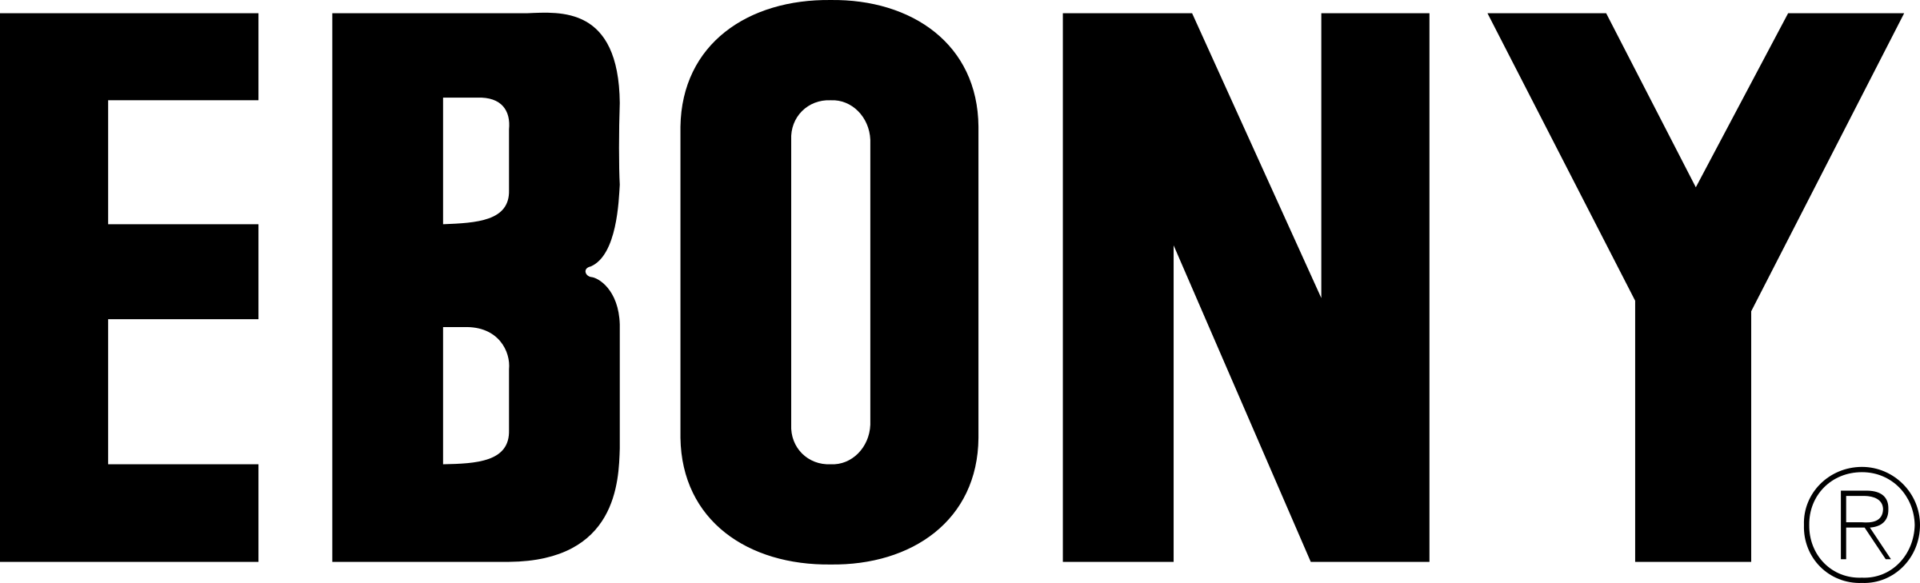 ebony-1-logo-png-transparent